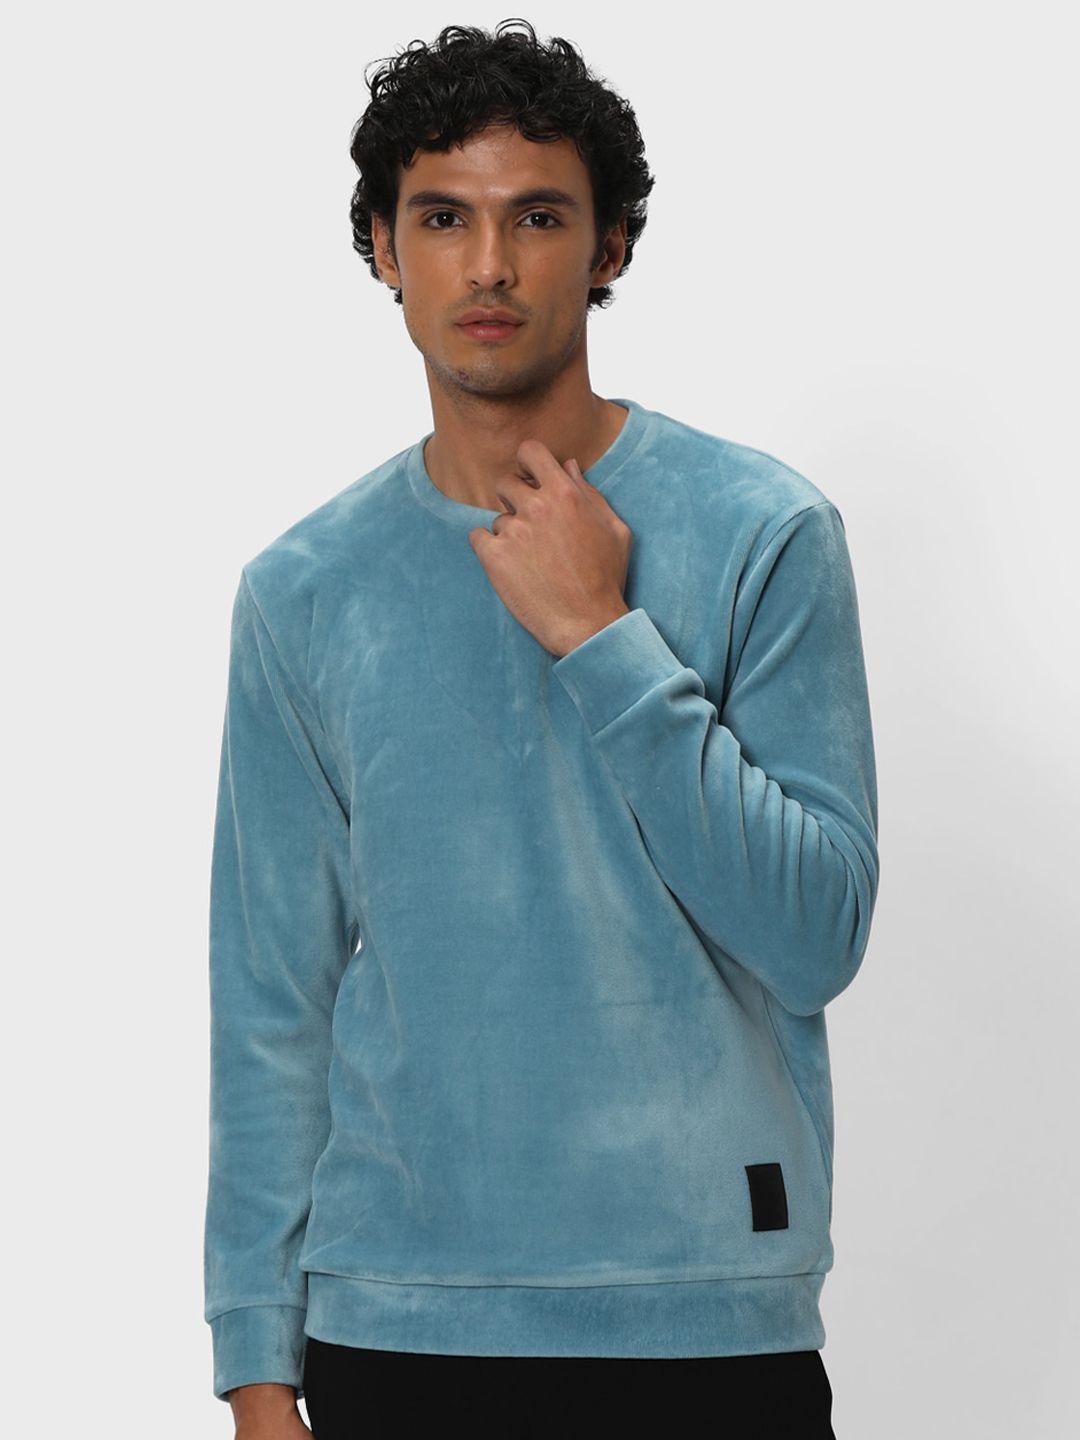 mufti round neck long sleeve pullover sweatshirt